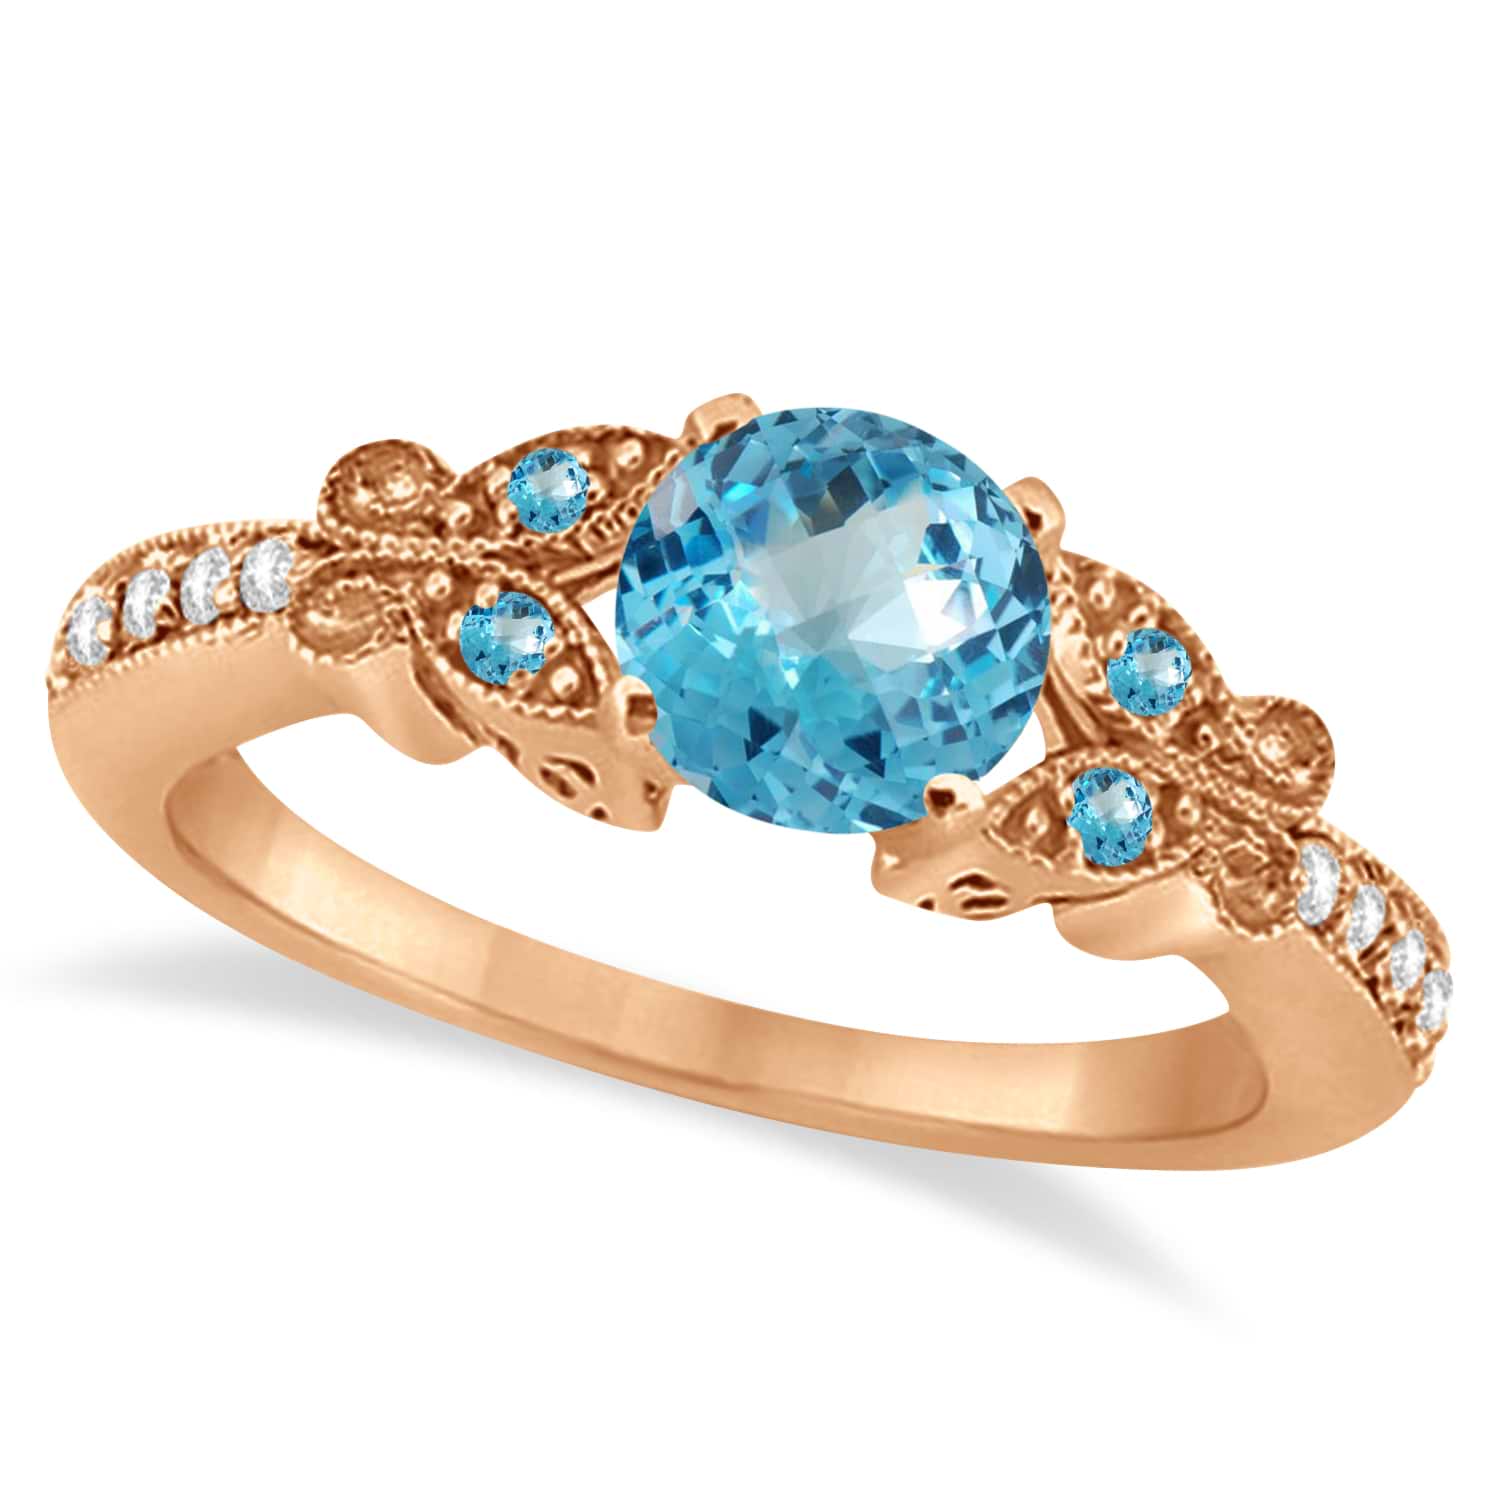 Butterfly Blue Topaz & Diamond Engagement Ring 18K Rose Gold 1.28ct